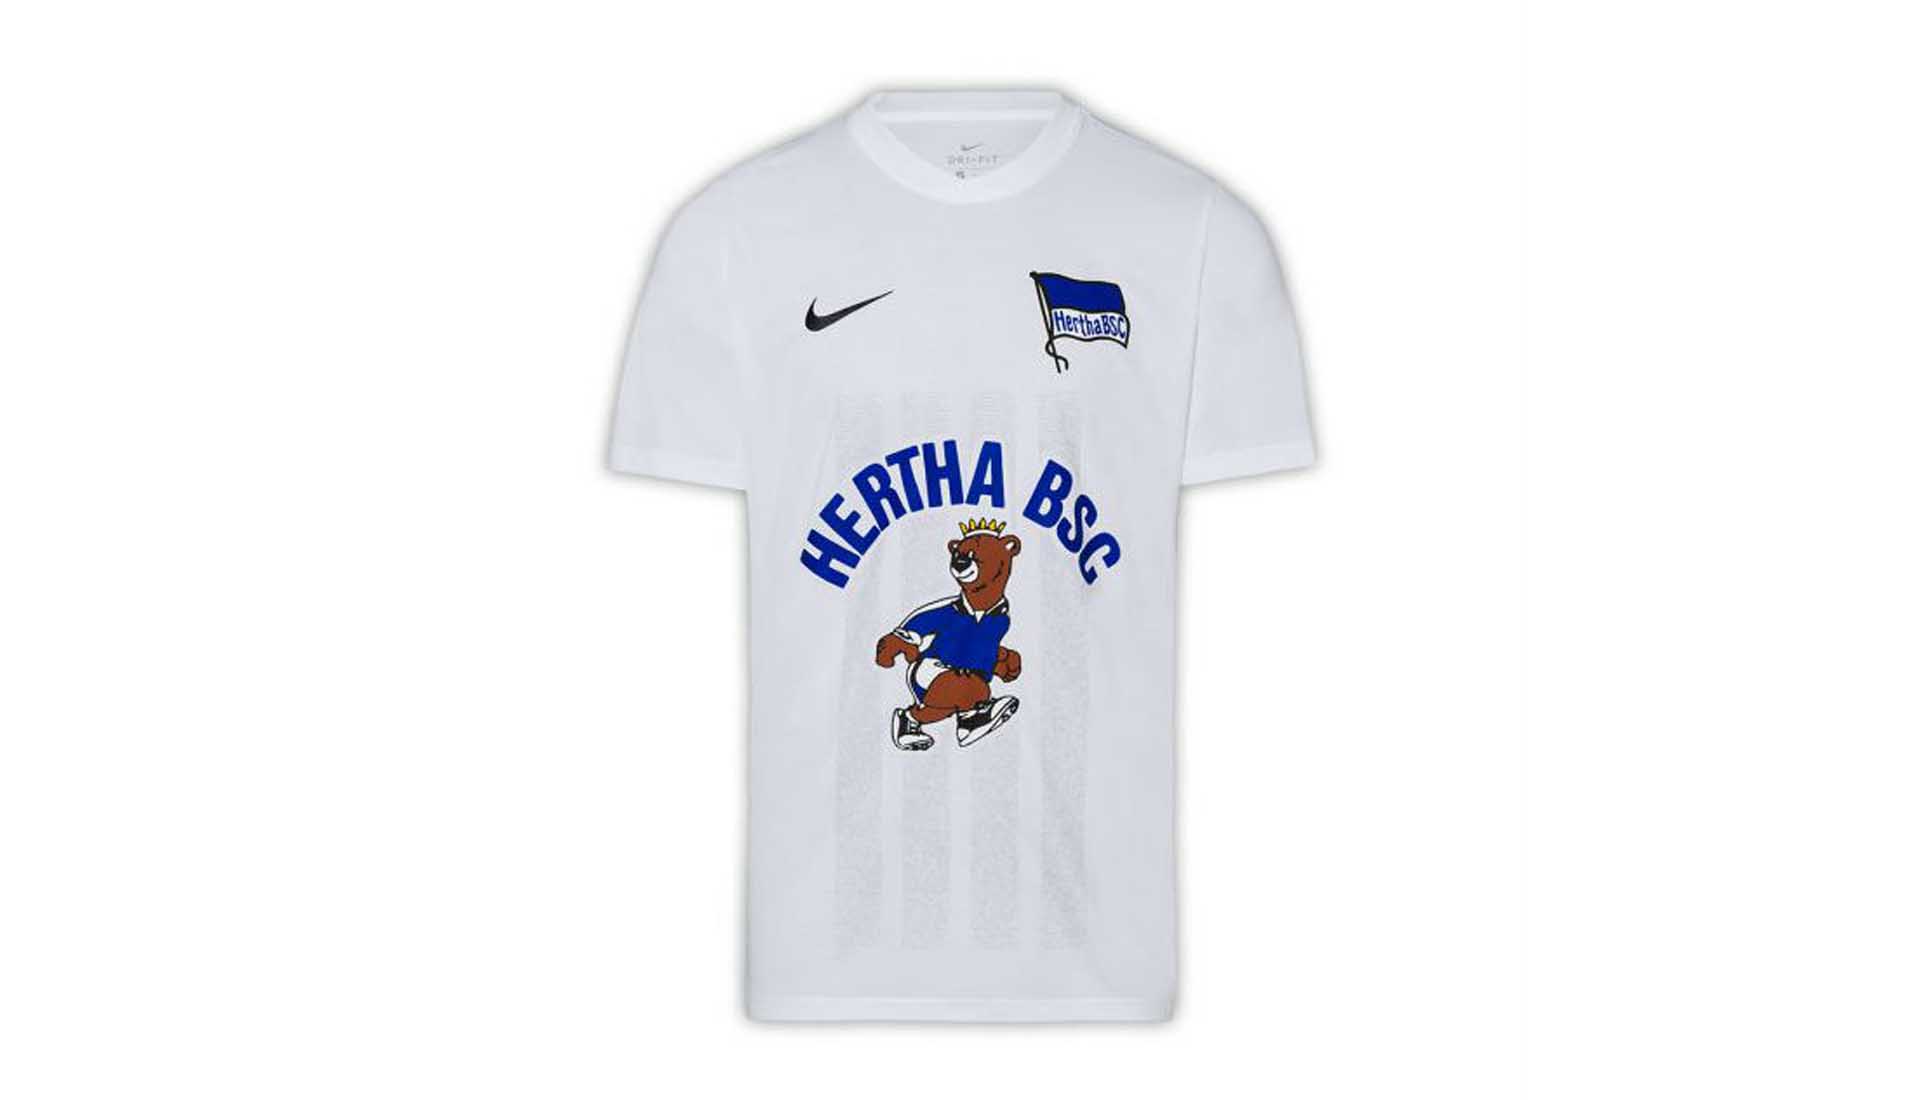 2-hertha-berlin-mauerfall-shirt.jpg